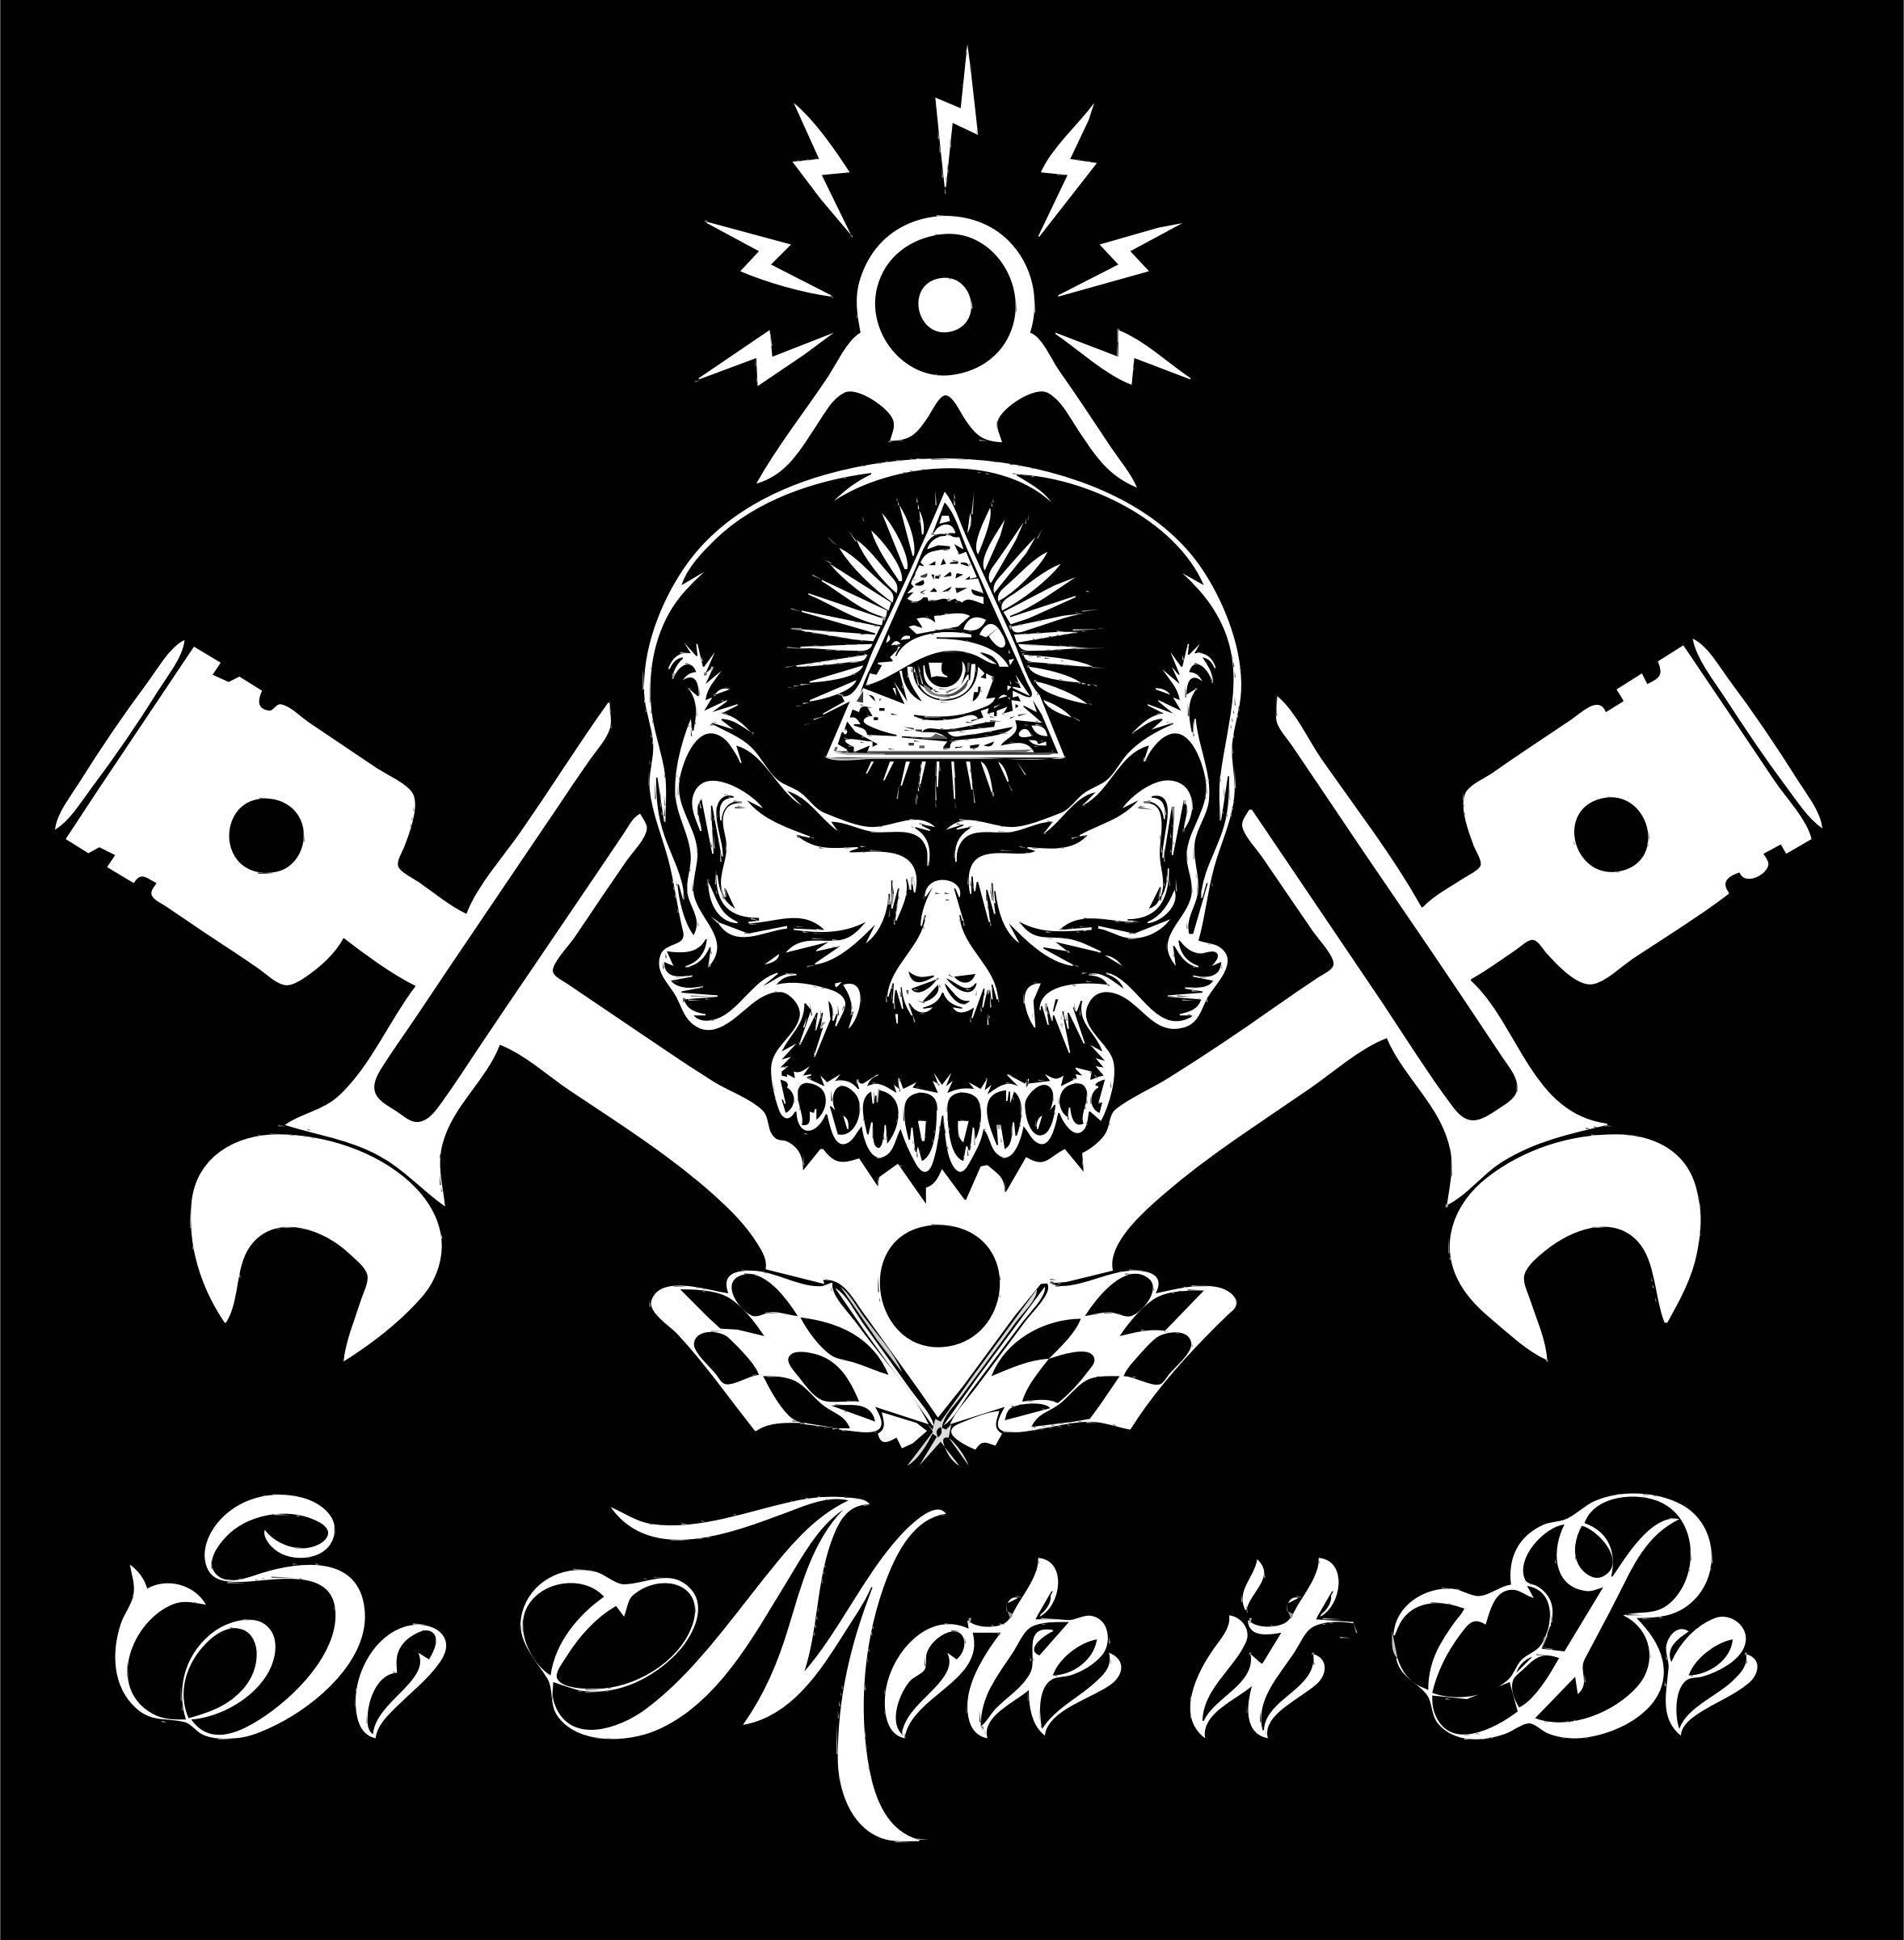 Hot Rod Logo - Freemason Widows Sons Masonic Hotrod Logo Icons PNG - Free PNG and ...